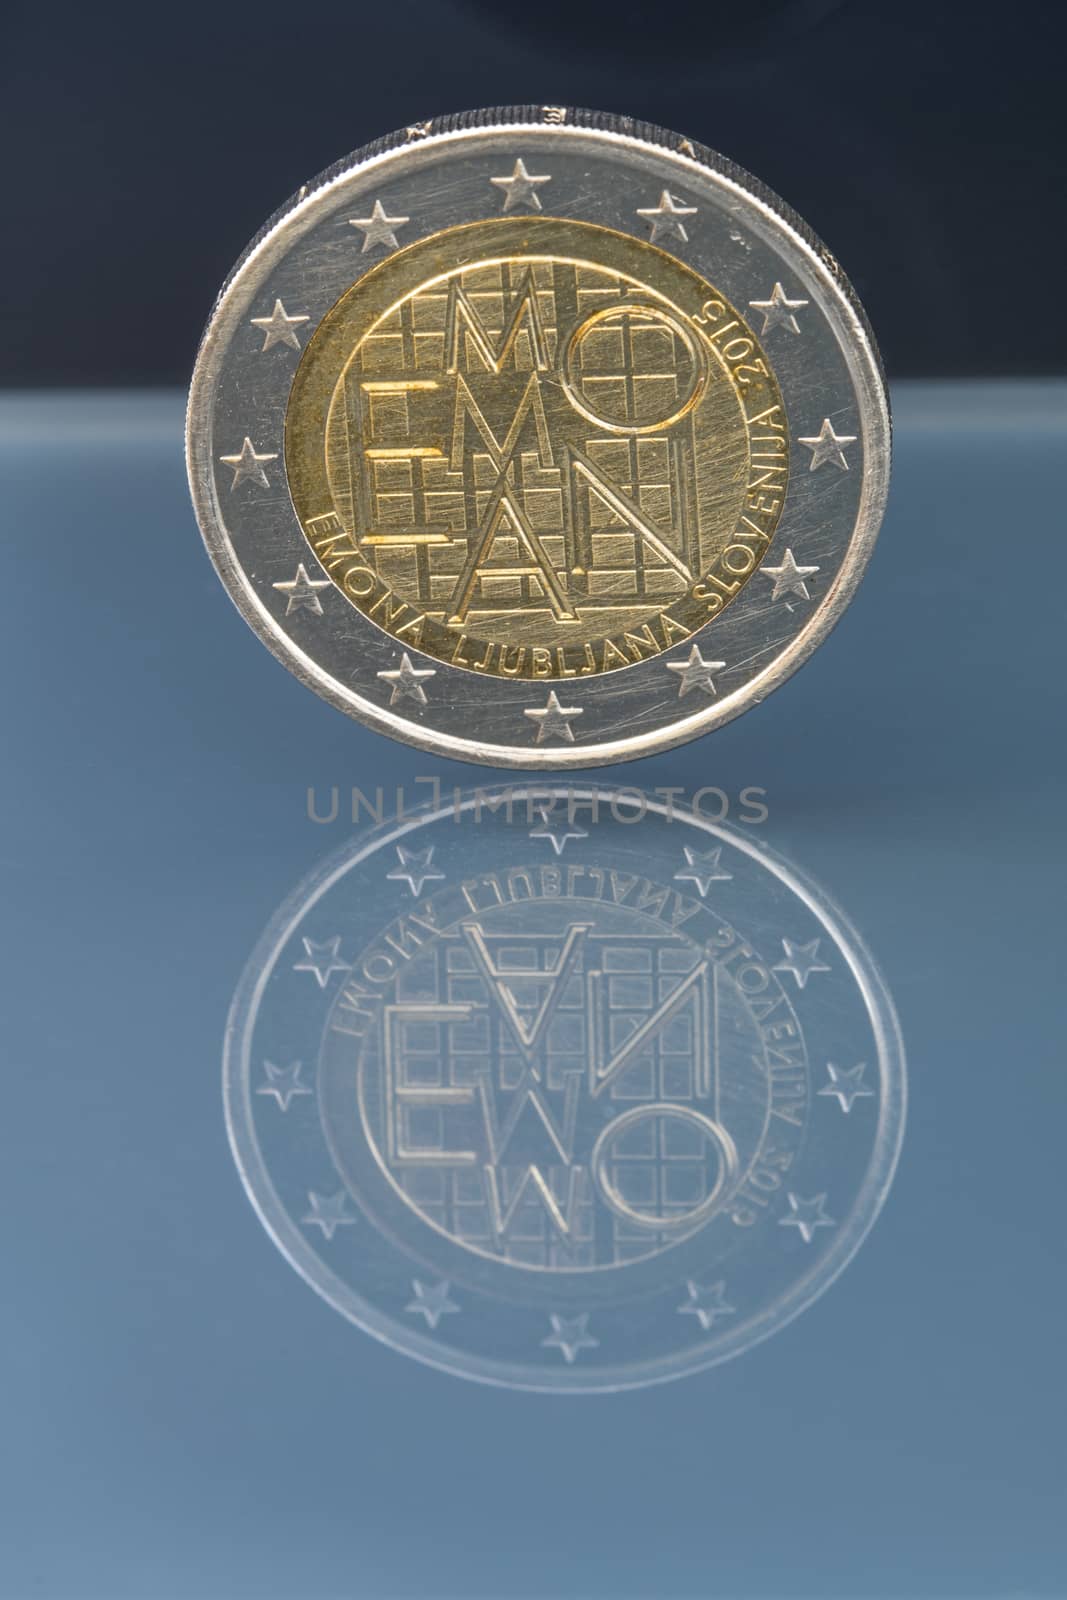 Commemorative 2 EUR coin Emona, Slovenia by asafaric